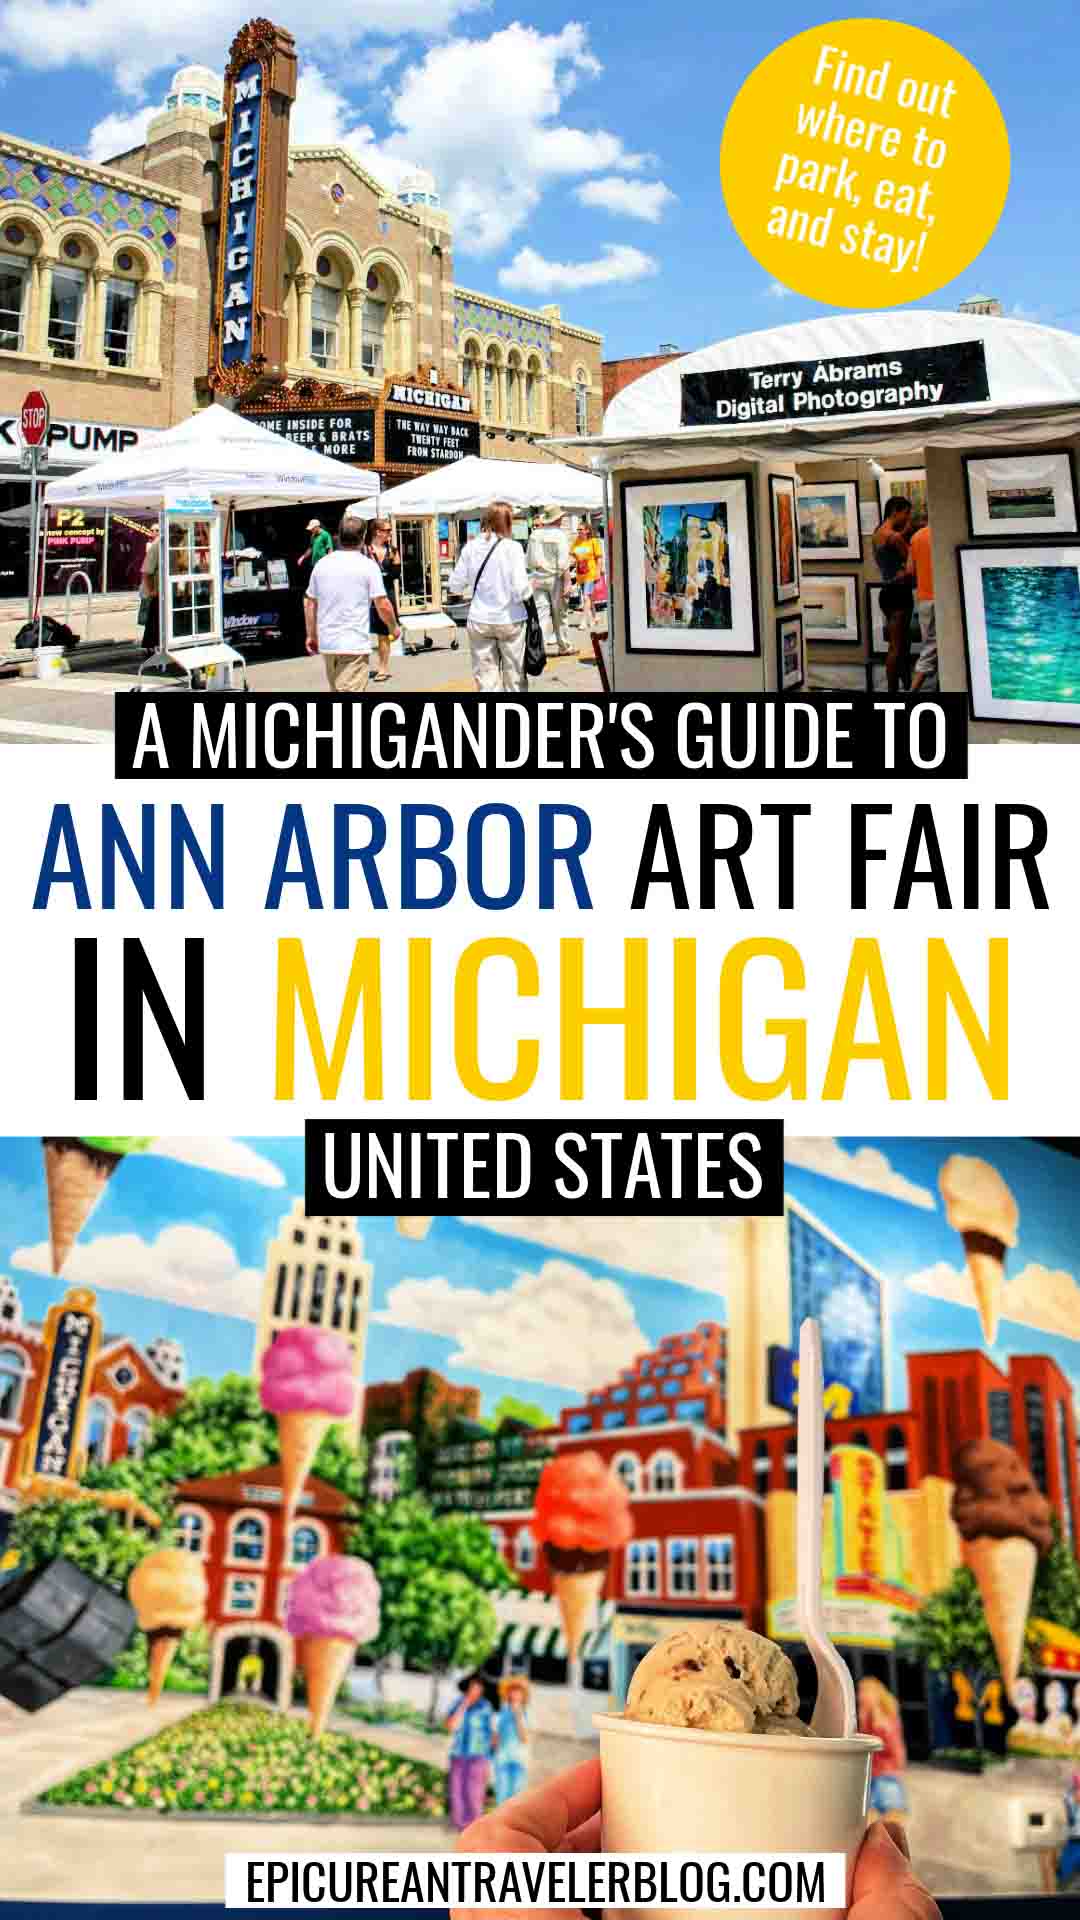 A Michigander's Guide to the Ann Arbor Art Fair in Michigan, United States